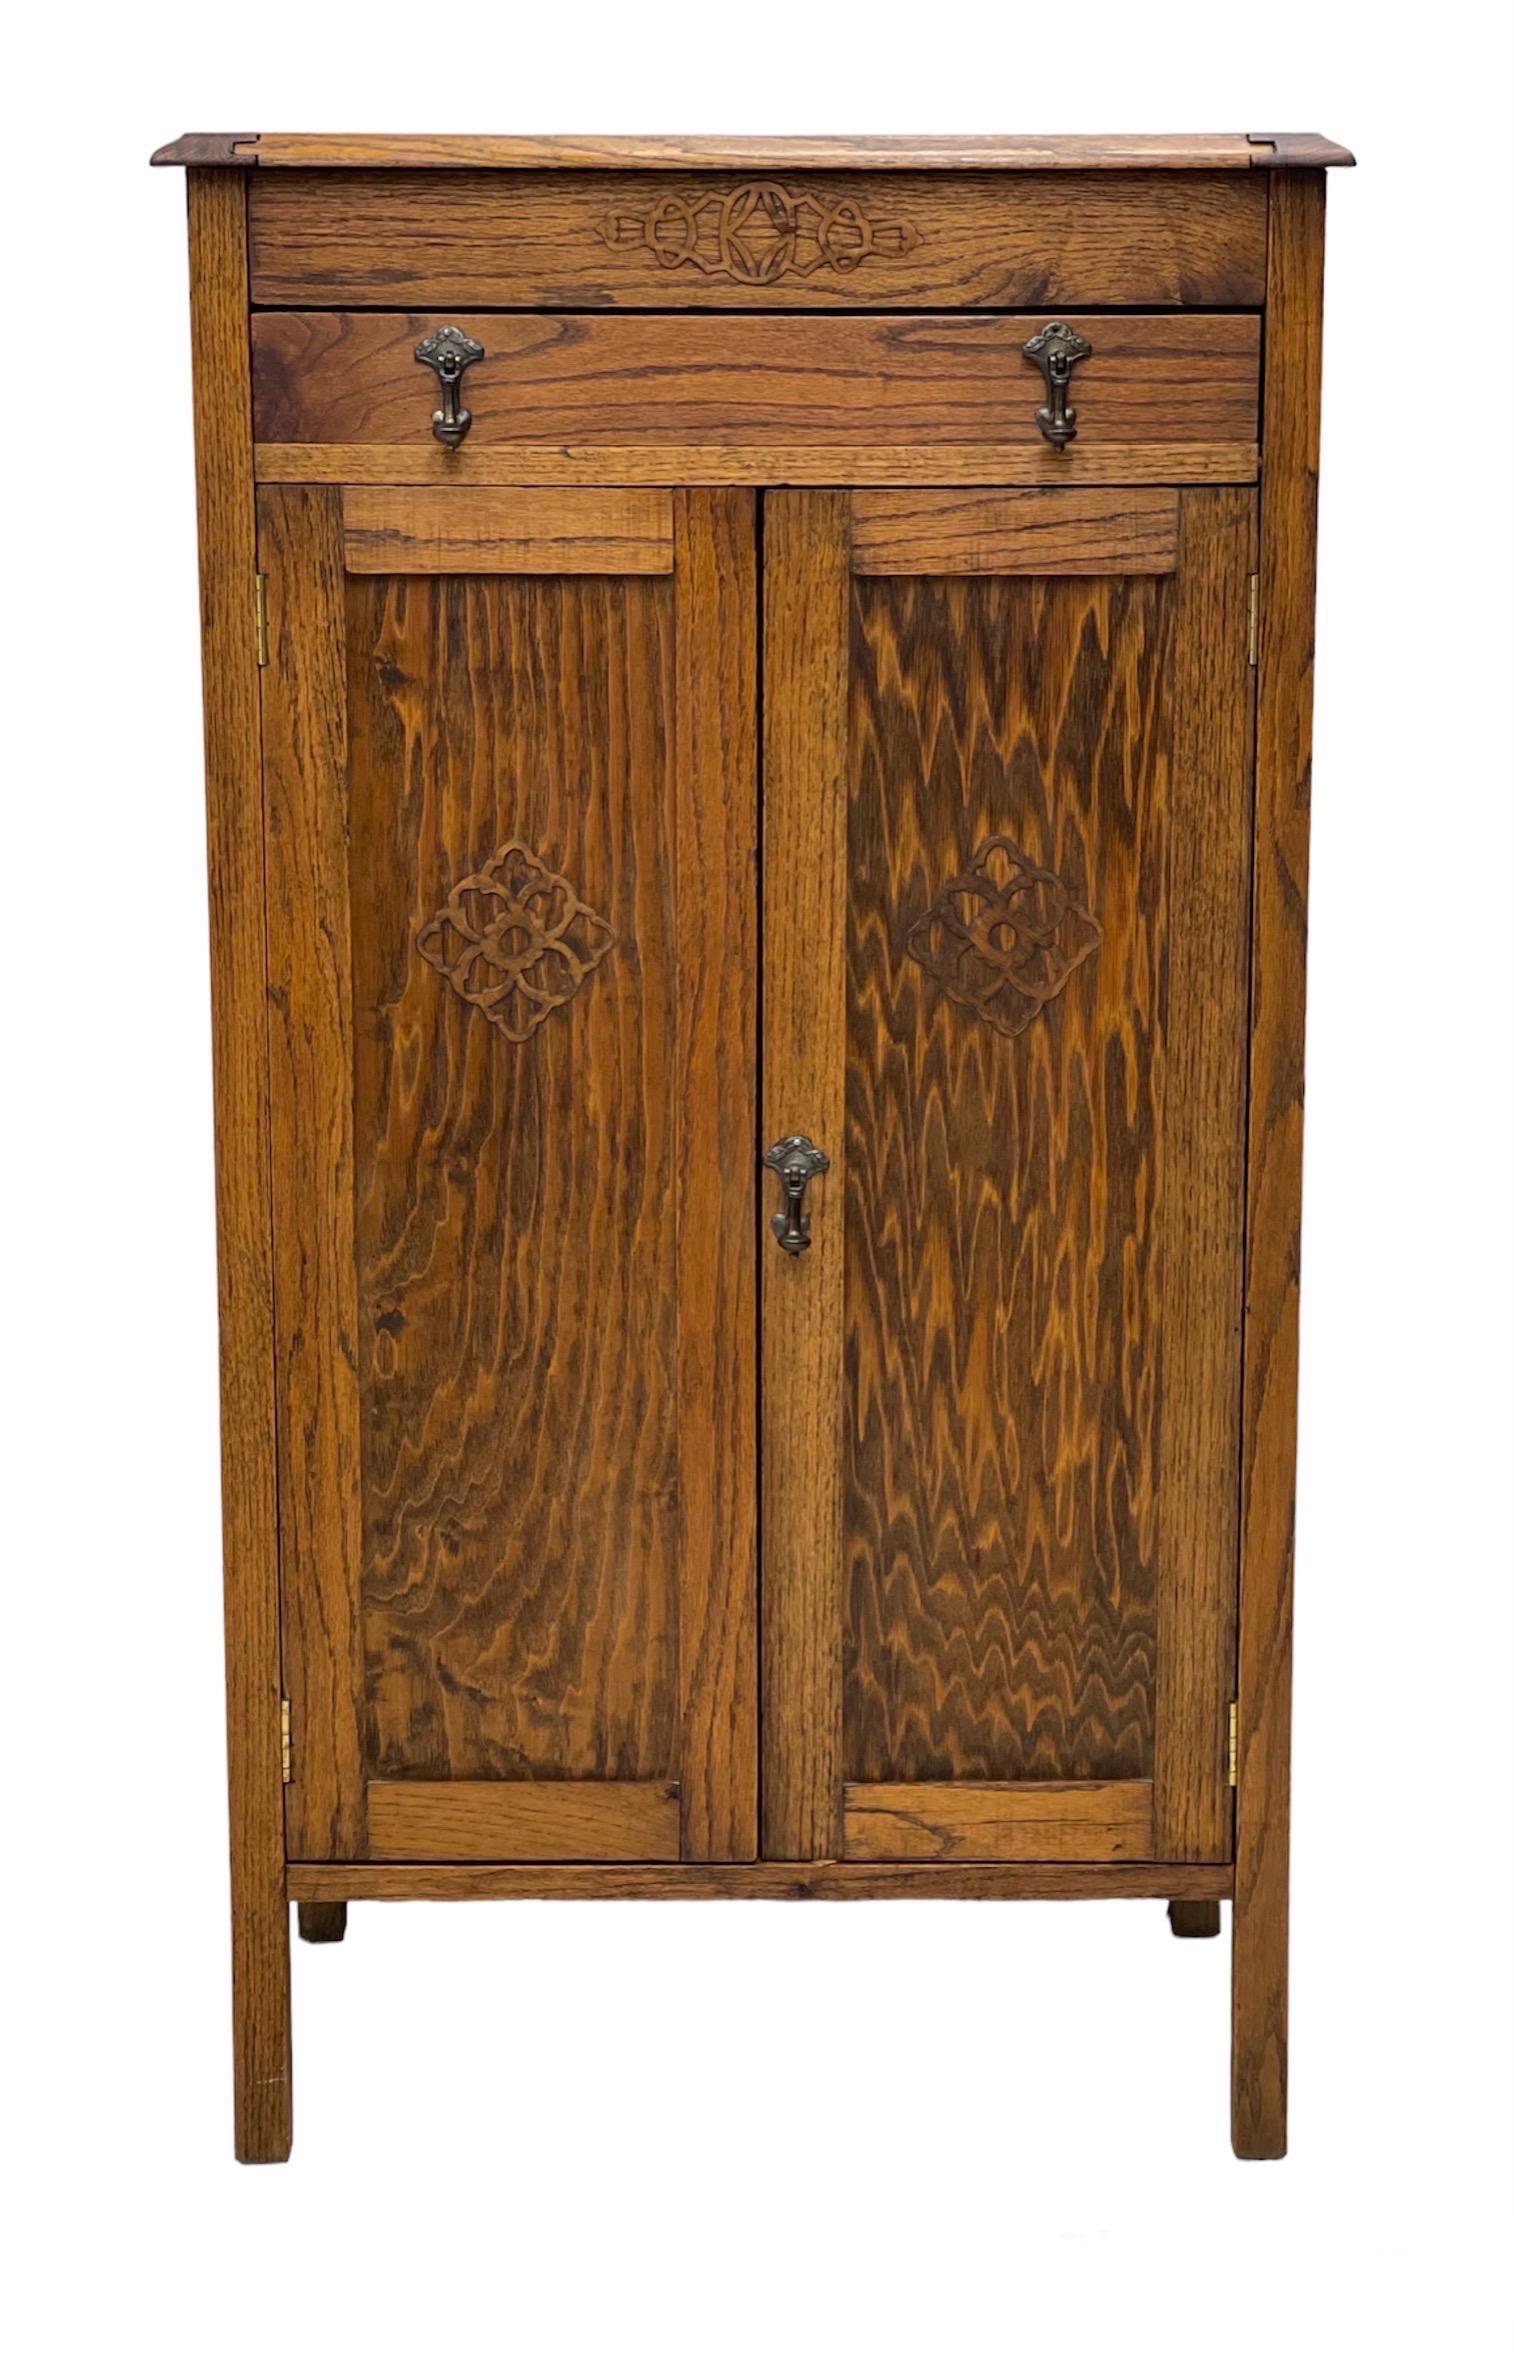 Vintage cabinet storage with adjustable shelves. Possibly Tiger oak with original hardware.

Dimensions: 27 W; 18 1/2 D; 48 H.